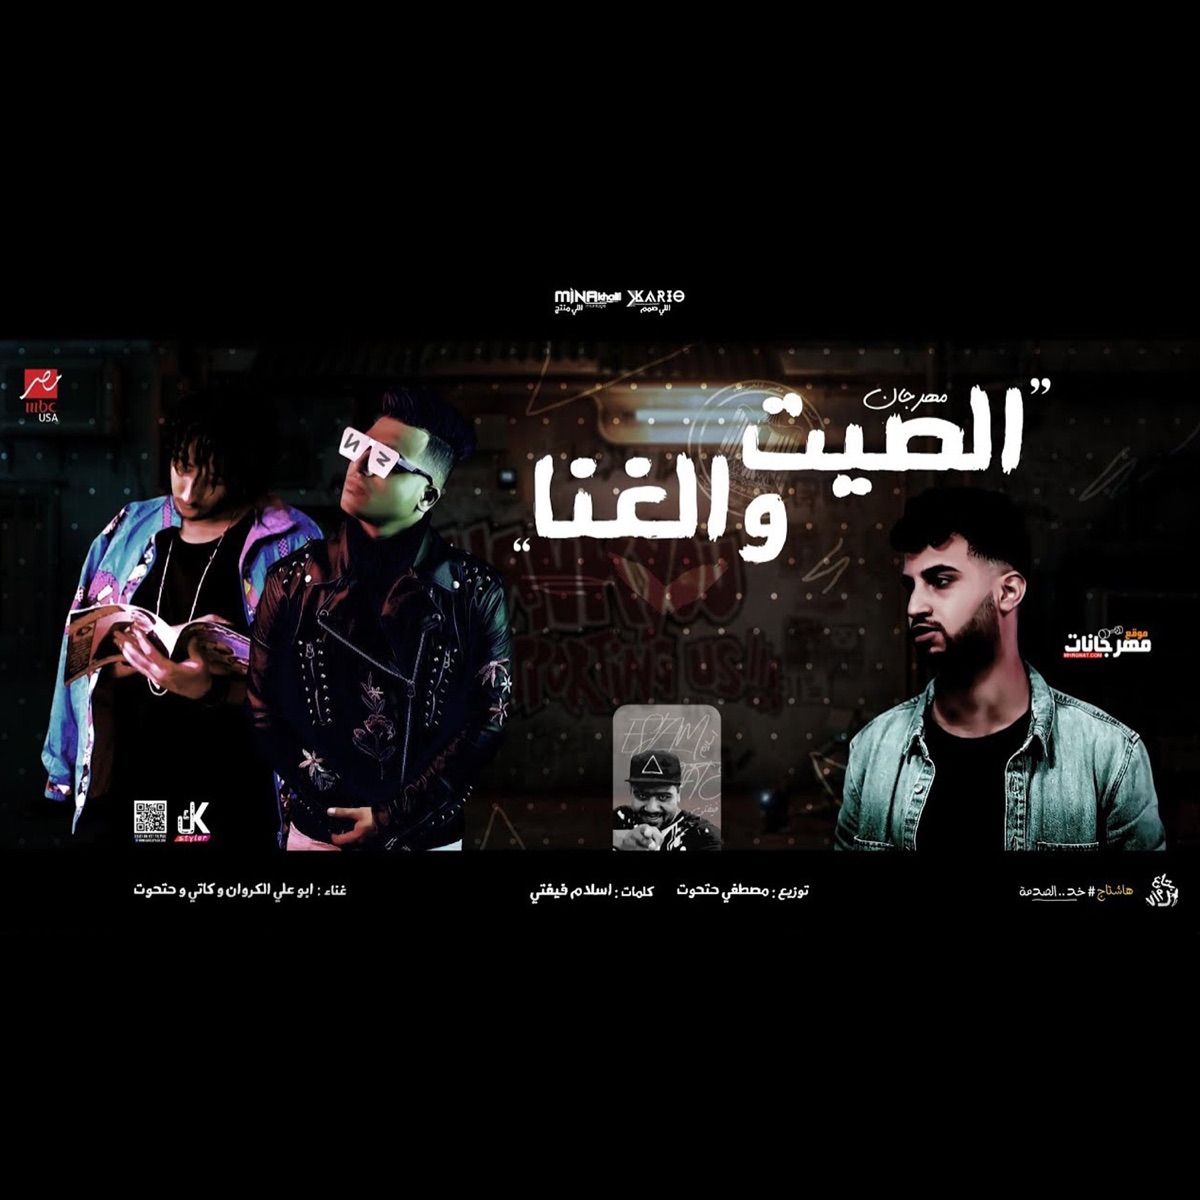 ياعم كان يا مكان راحو صحابي الجدعان - Single - Album by MINA_KHALIL - Apple  Music